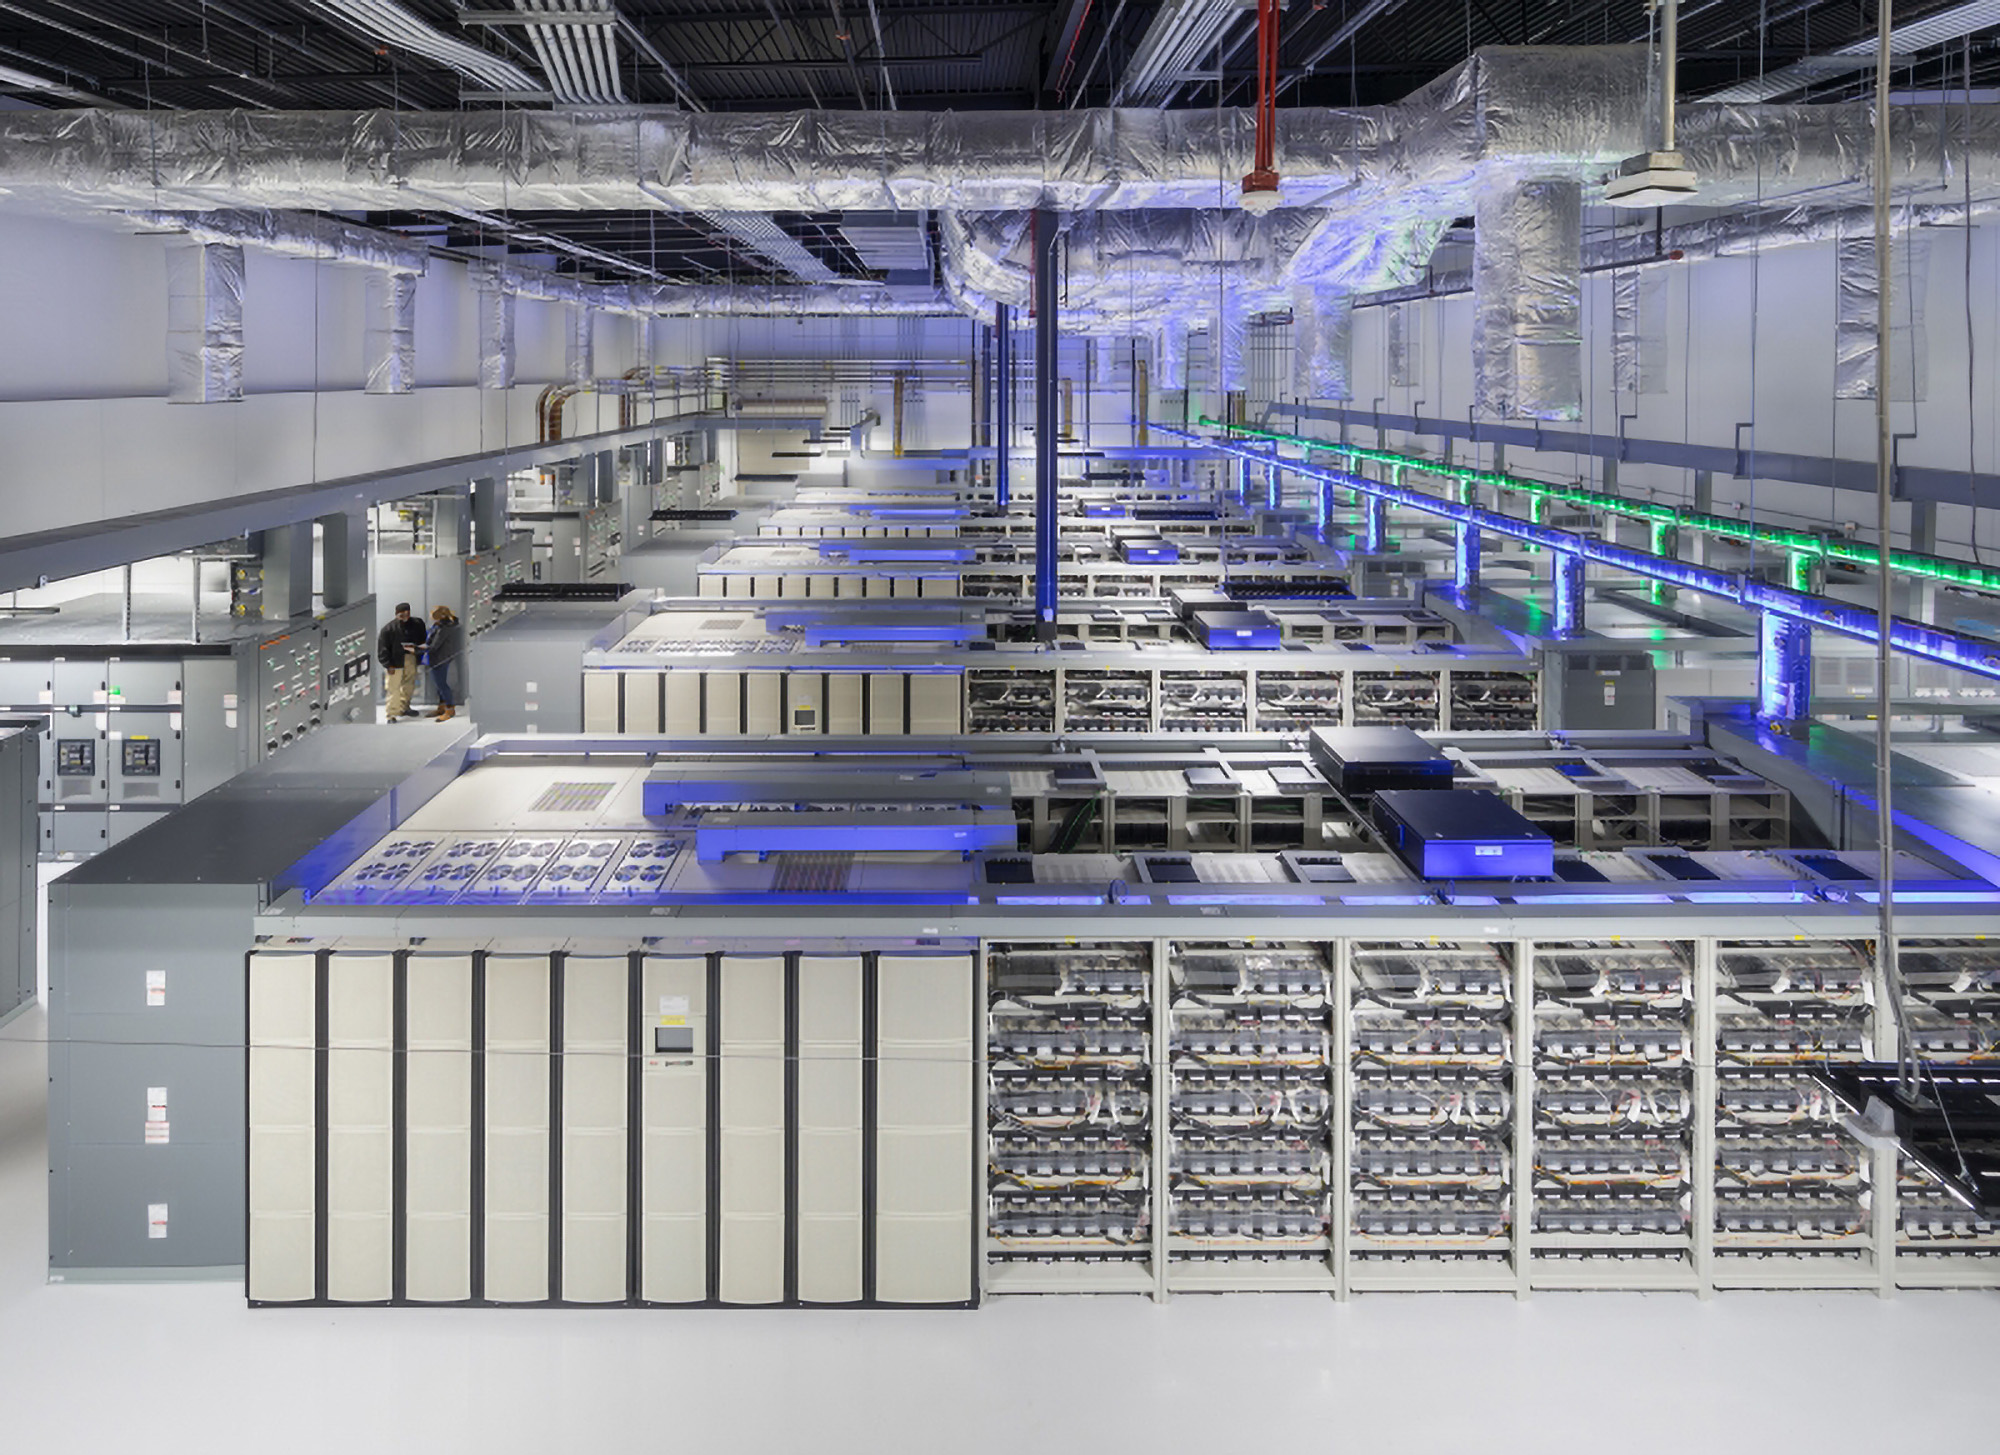 Data center storage unit. Rows upon rows of racks.